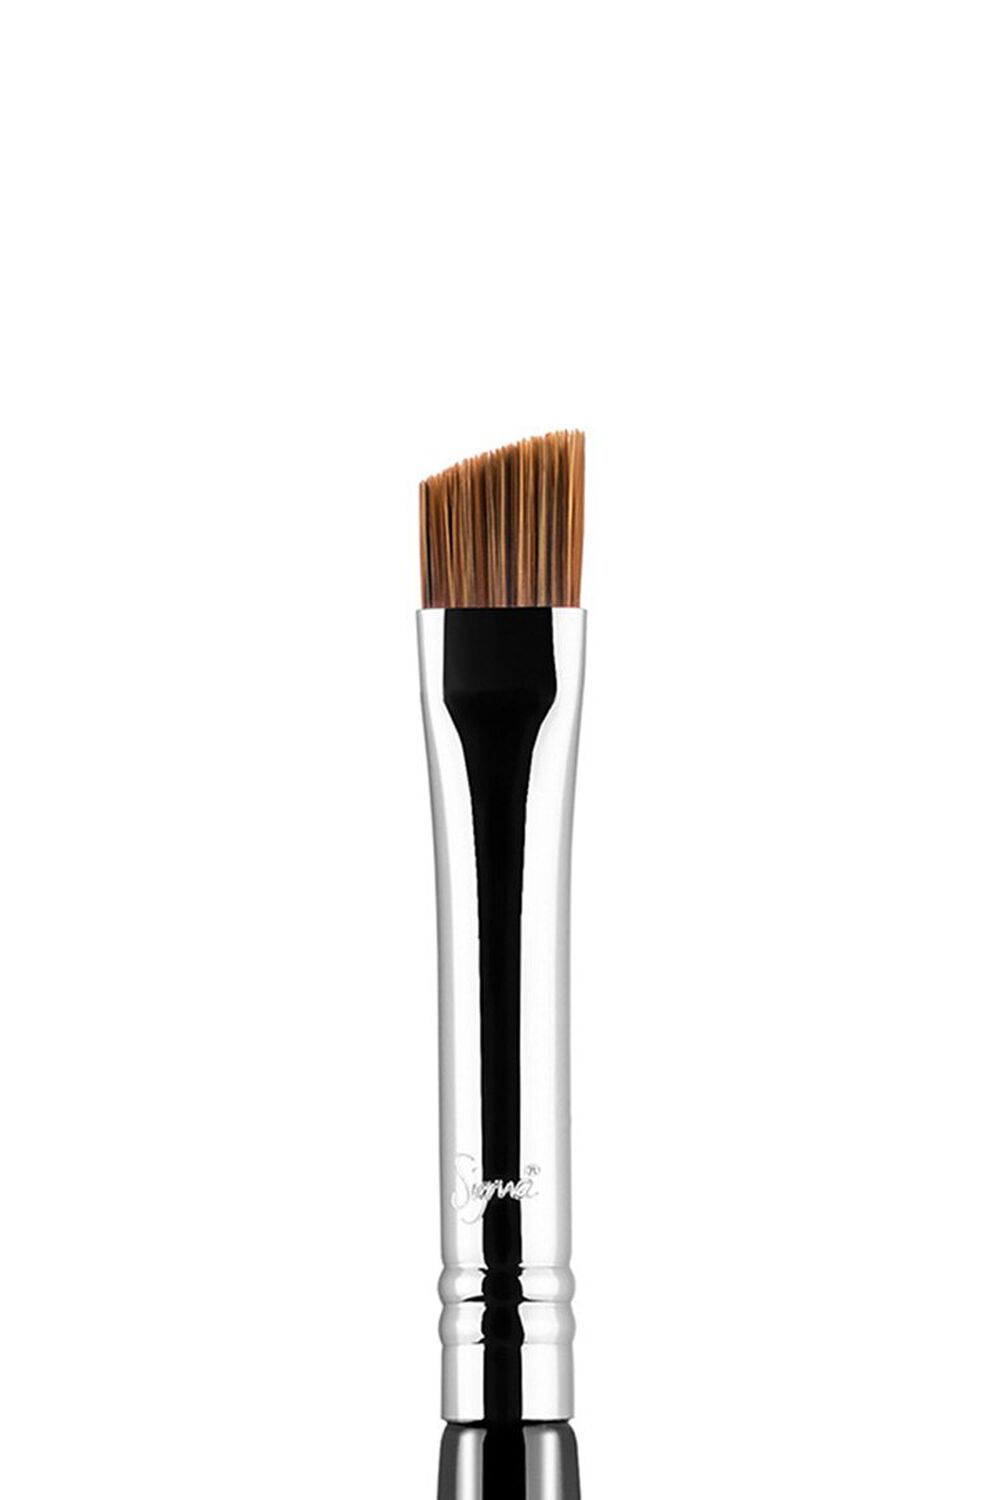 Sigma Beauty E75 – Angled Brow Brush, image 2